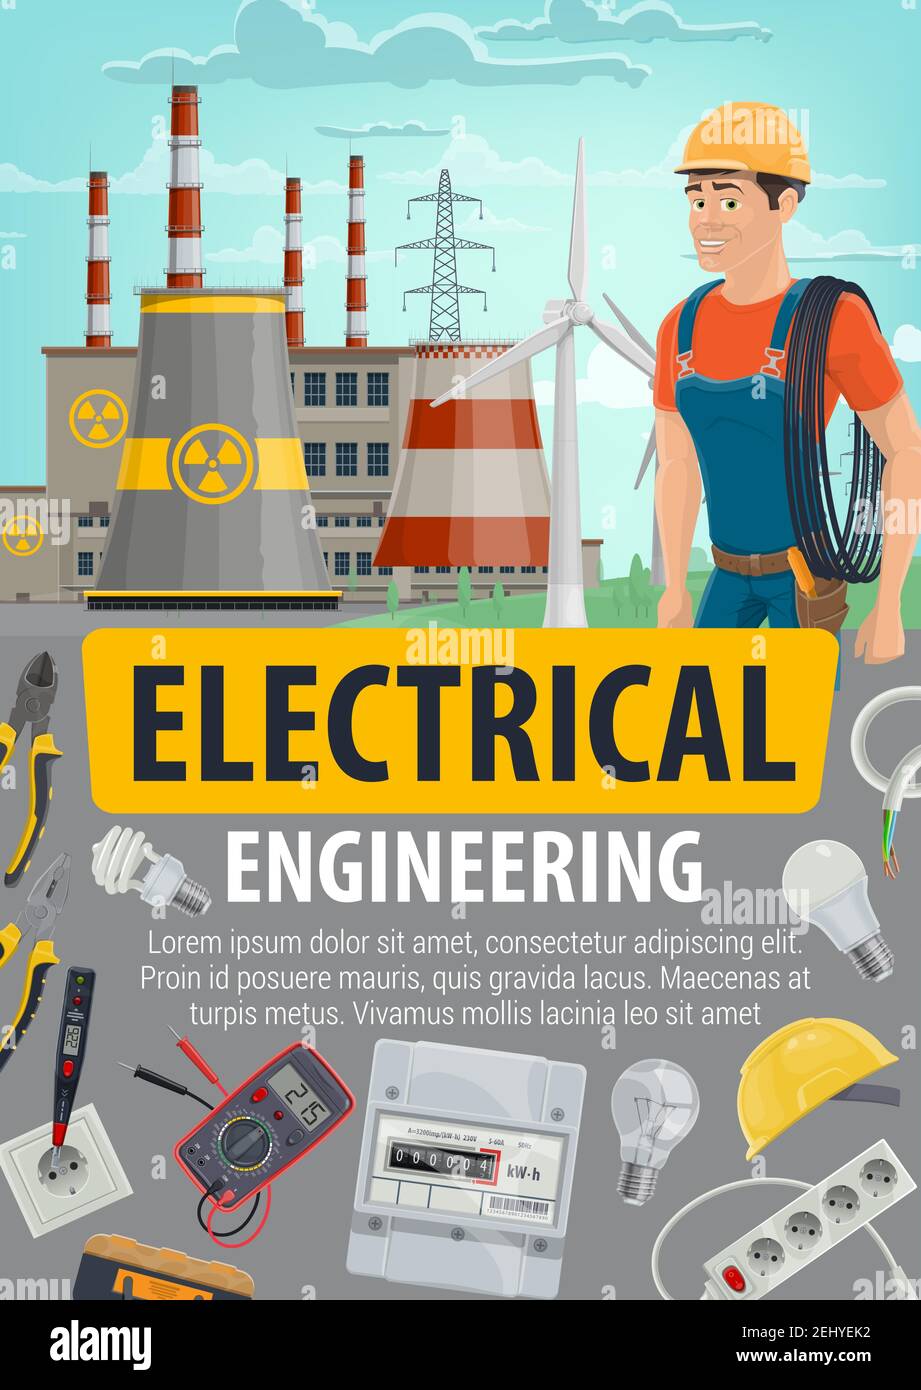 Electrical Engineering Equipment